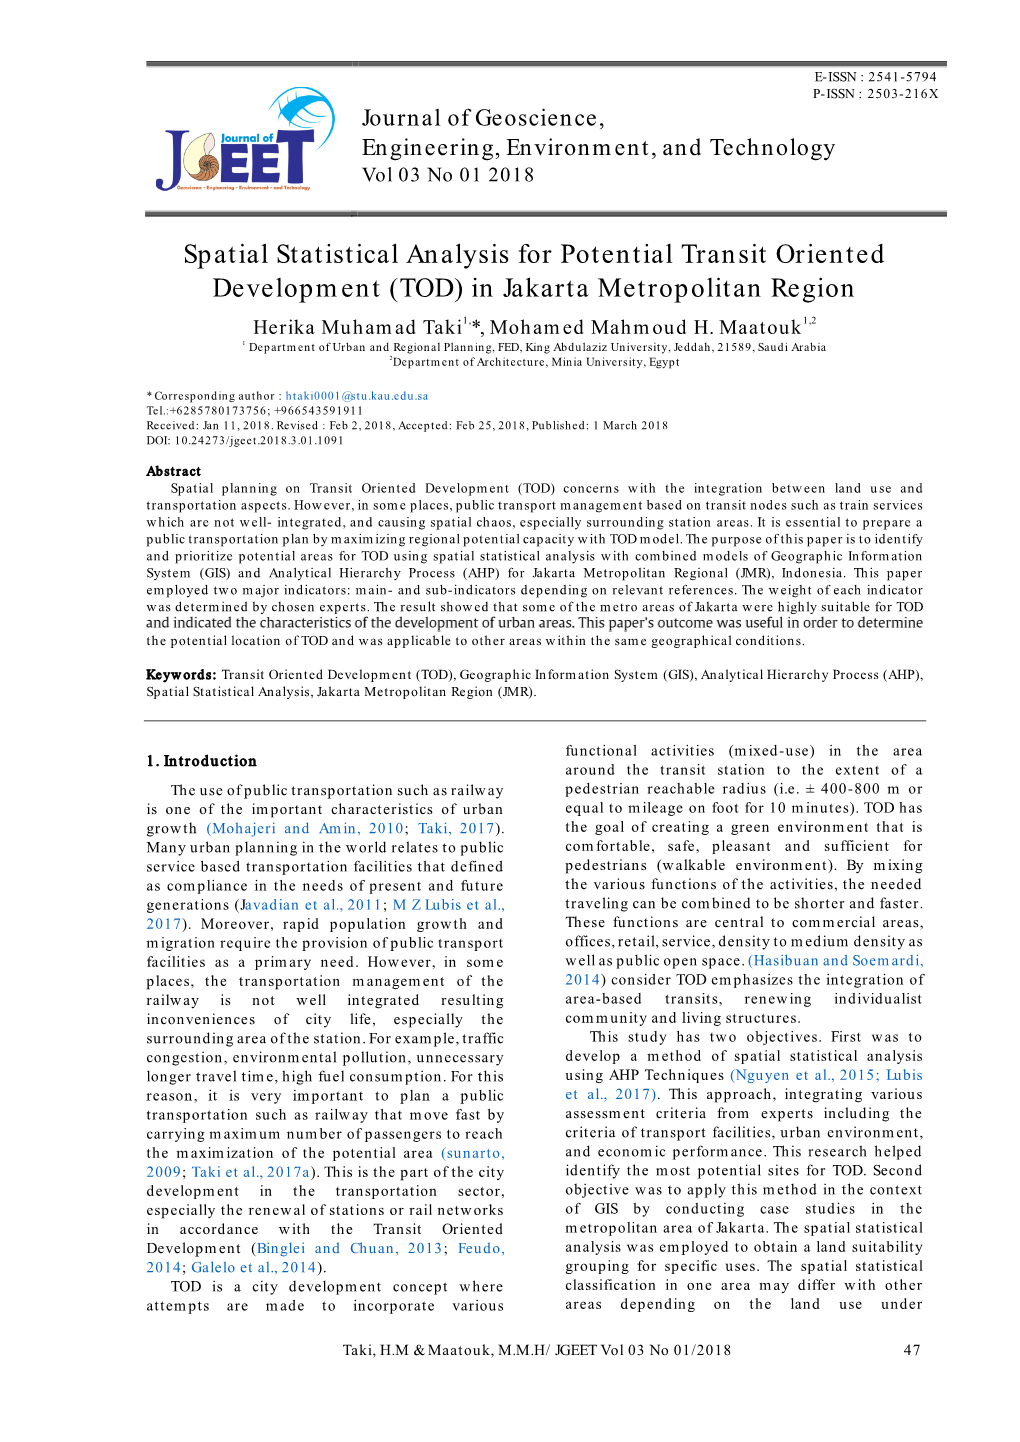 Spatial Statistical Analysis for Potential Transit Oriented Development (TOD) in Jakarta Metropolitan Region Herika Muhamad Taki1,*, Mohamed Mahmoud H